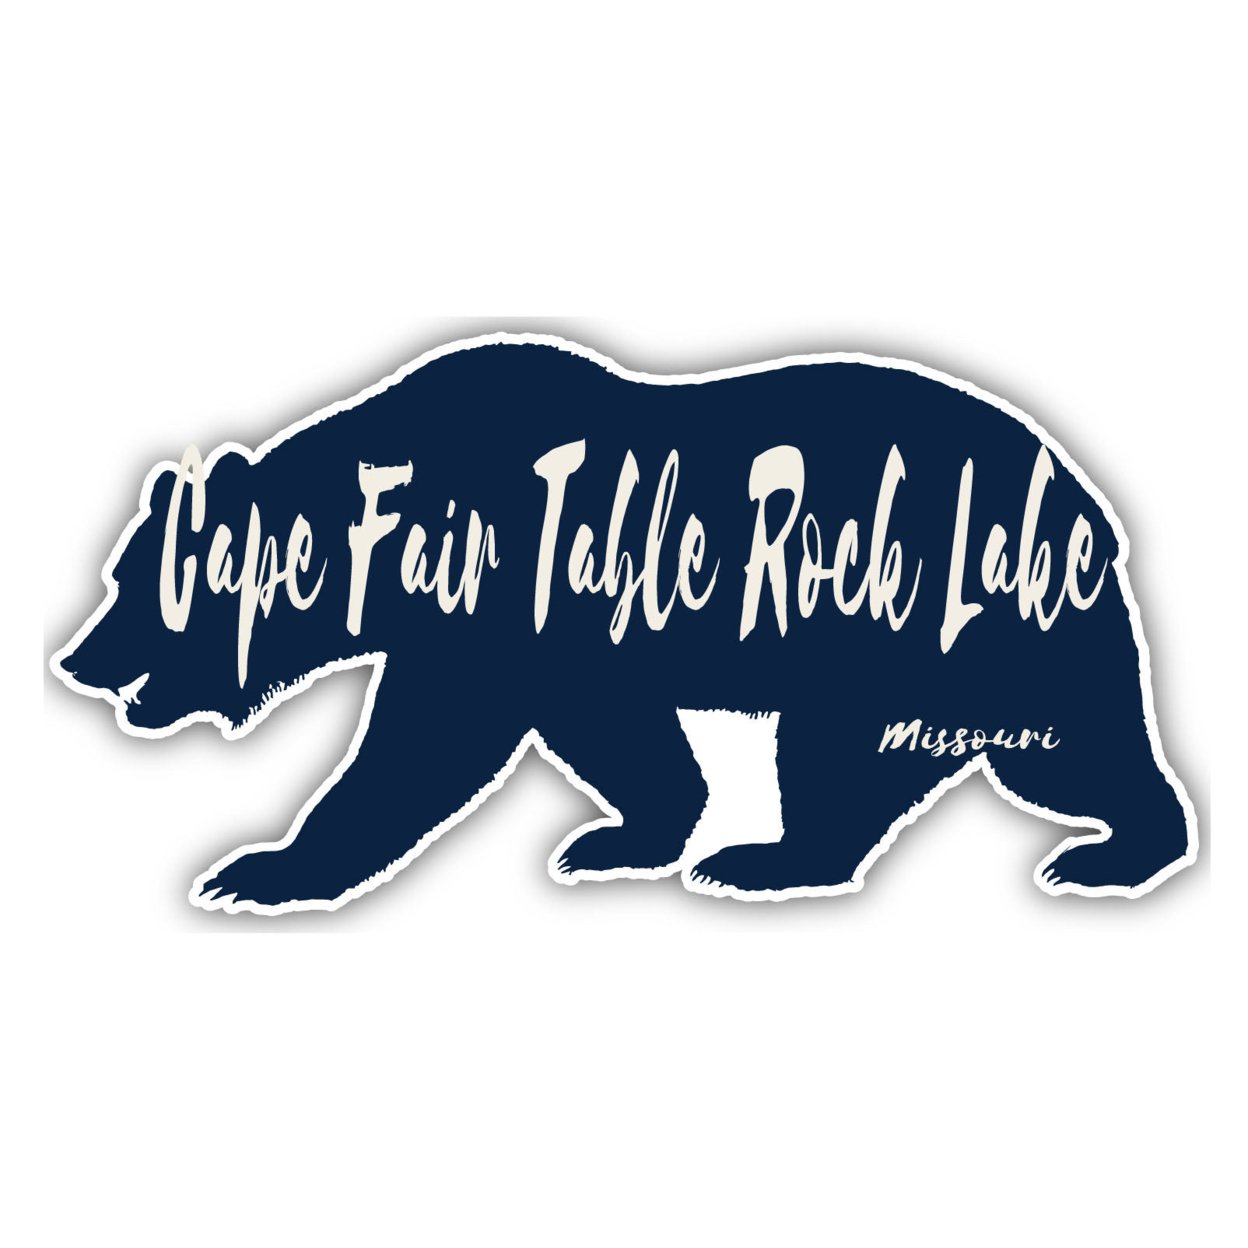 Cape Fair Table Rock Lake Missouri Souvenir Decorative Stickers (Choose Theme And Size) - Single Unit, 4-Inch, Bear